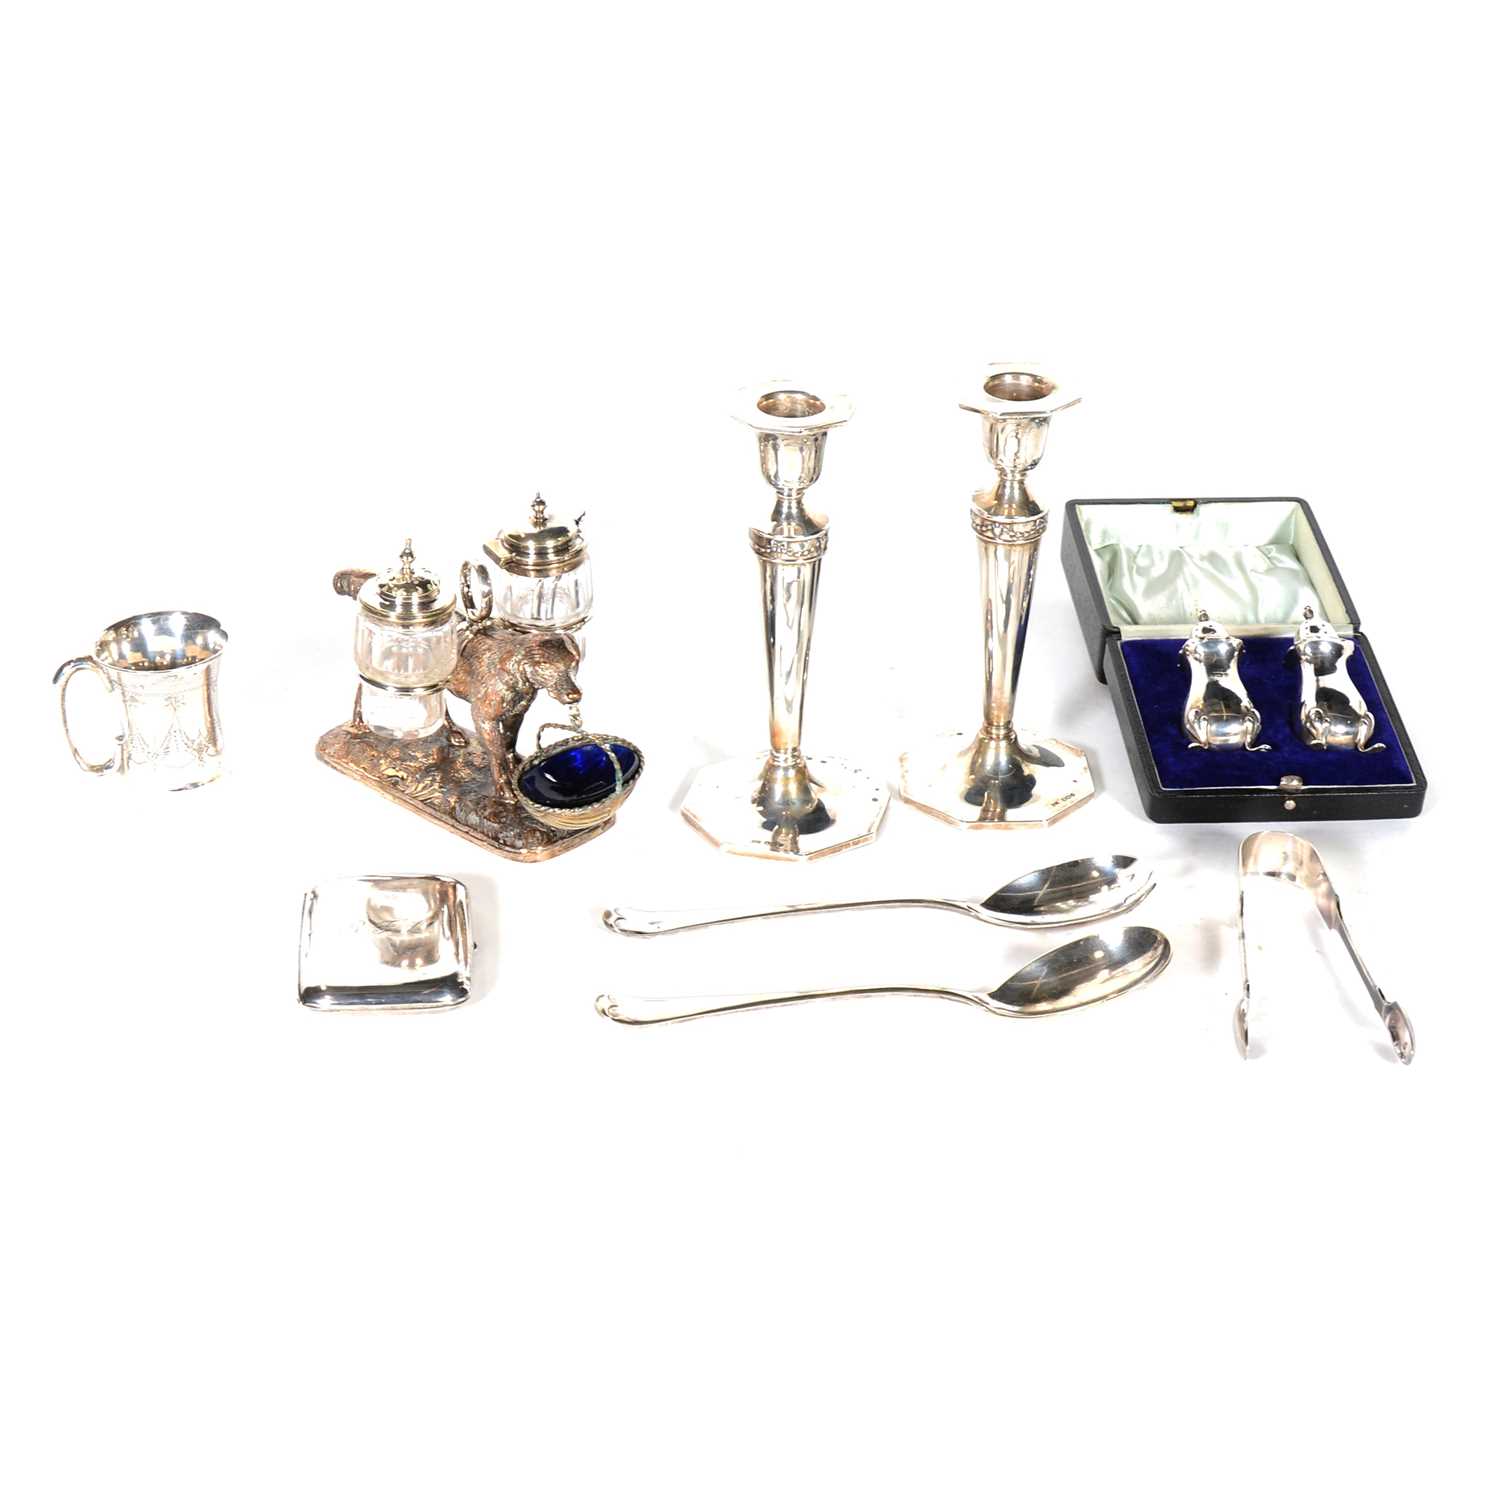 Lot 178 - A pair of silver candlesticks, christening mug, condiment set, cruet stand with retriever, plated ware.